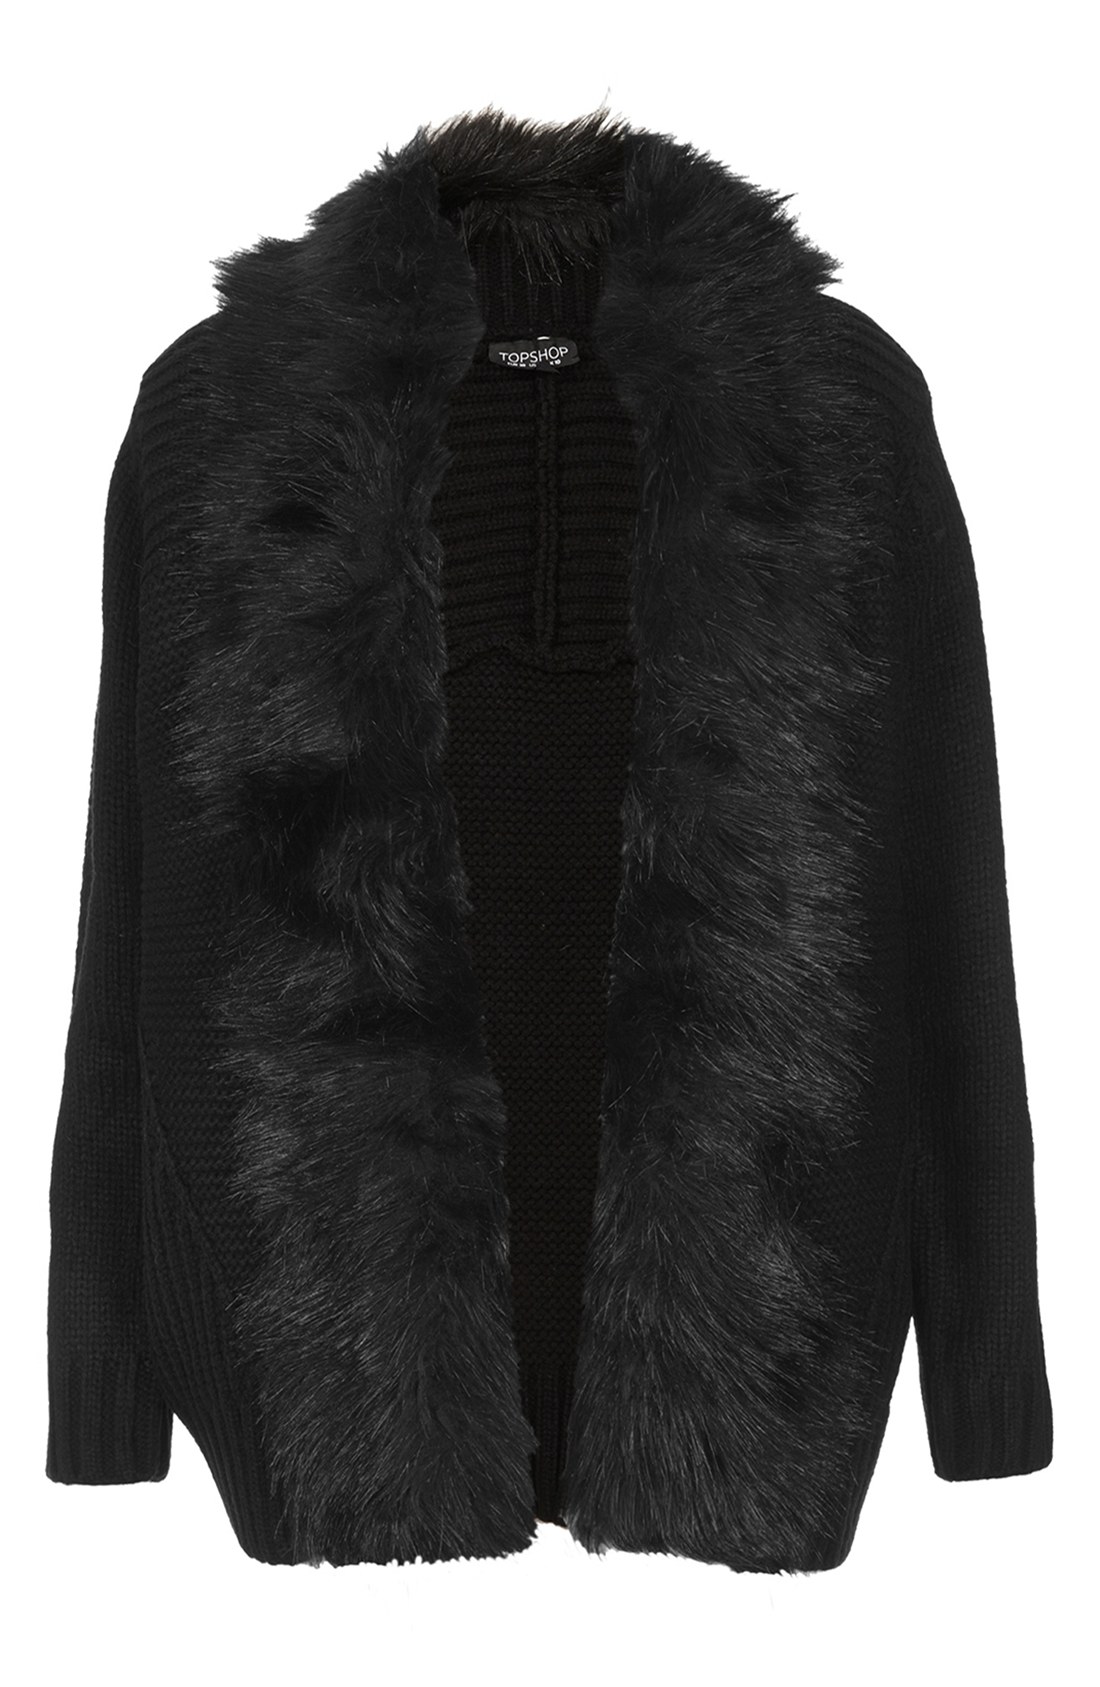 Topshop Faux Fur Trim Cardigan In Black Lyst